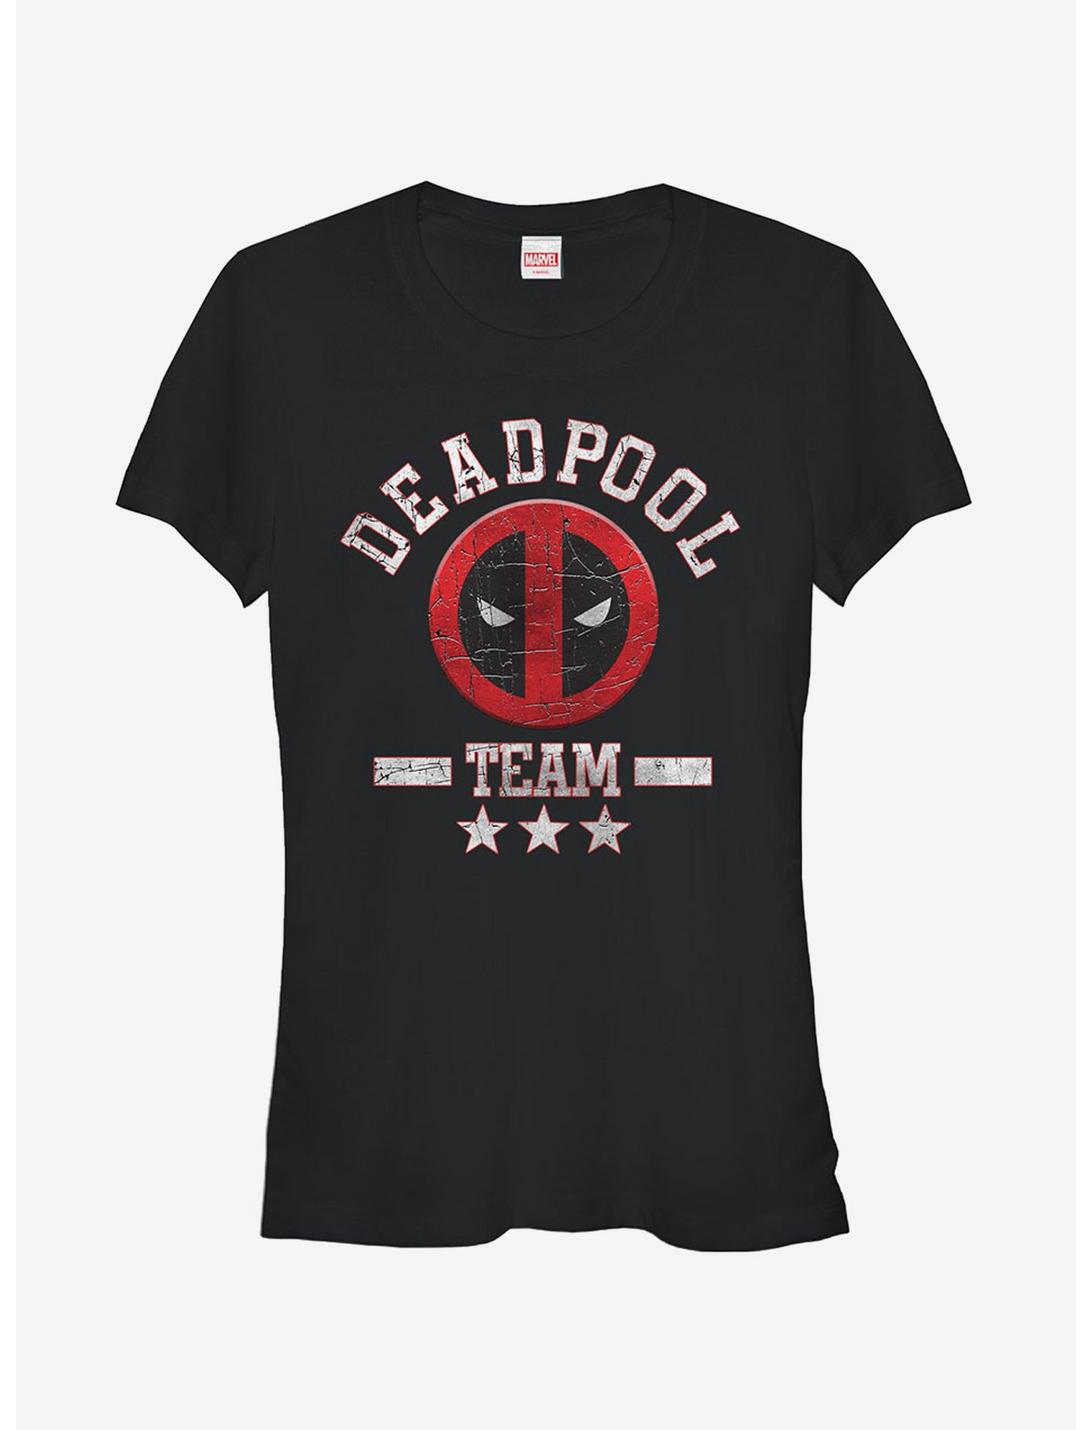 Marvel Deadpool Cracked Team Logo Girls T-Shirt, BLACK, hi-res